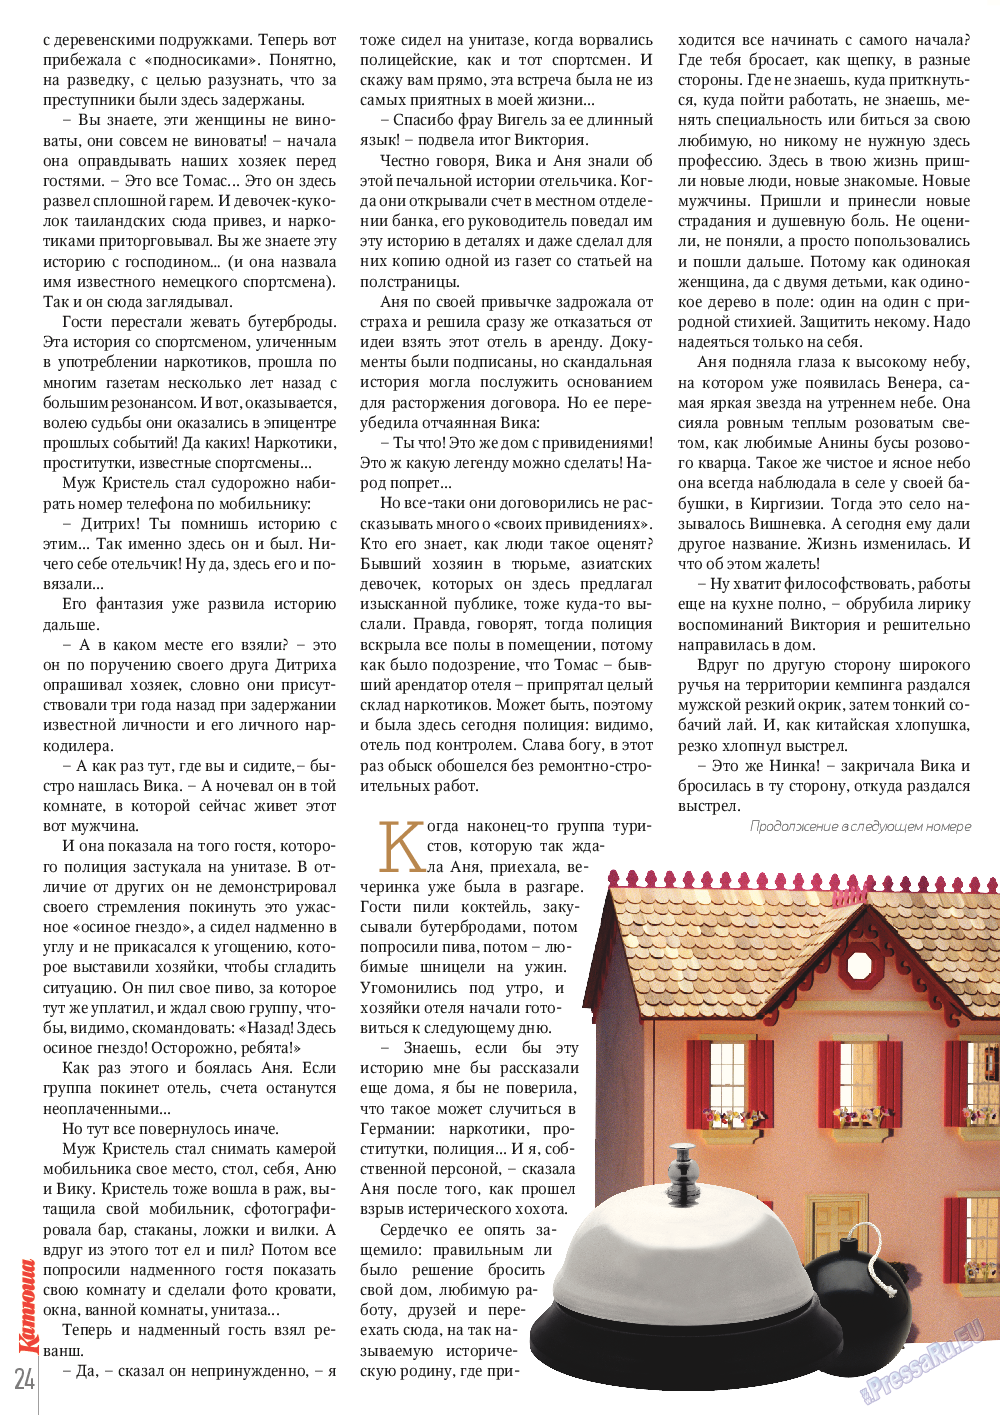 Катюша, журнал. 2014 №40 стр.24